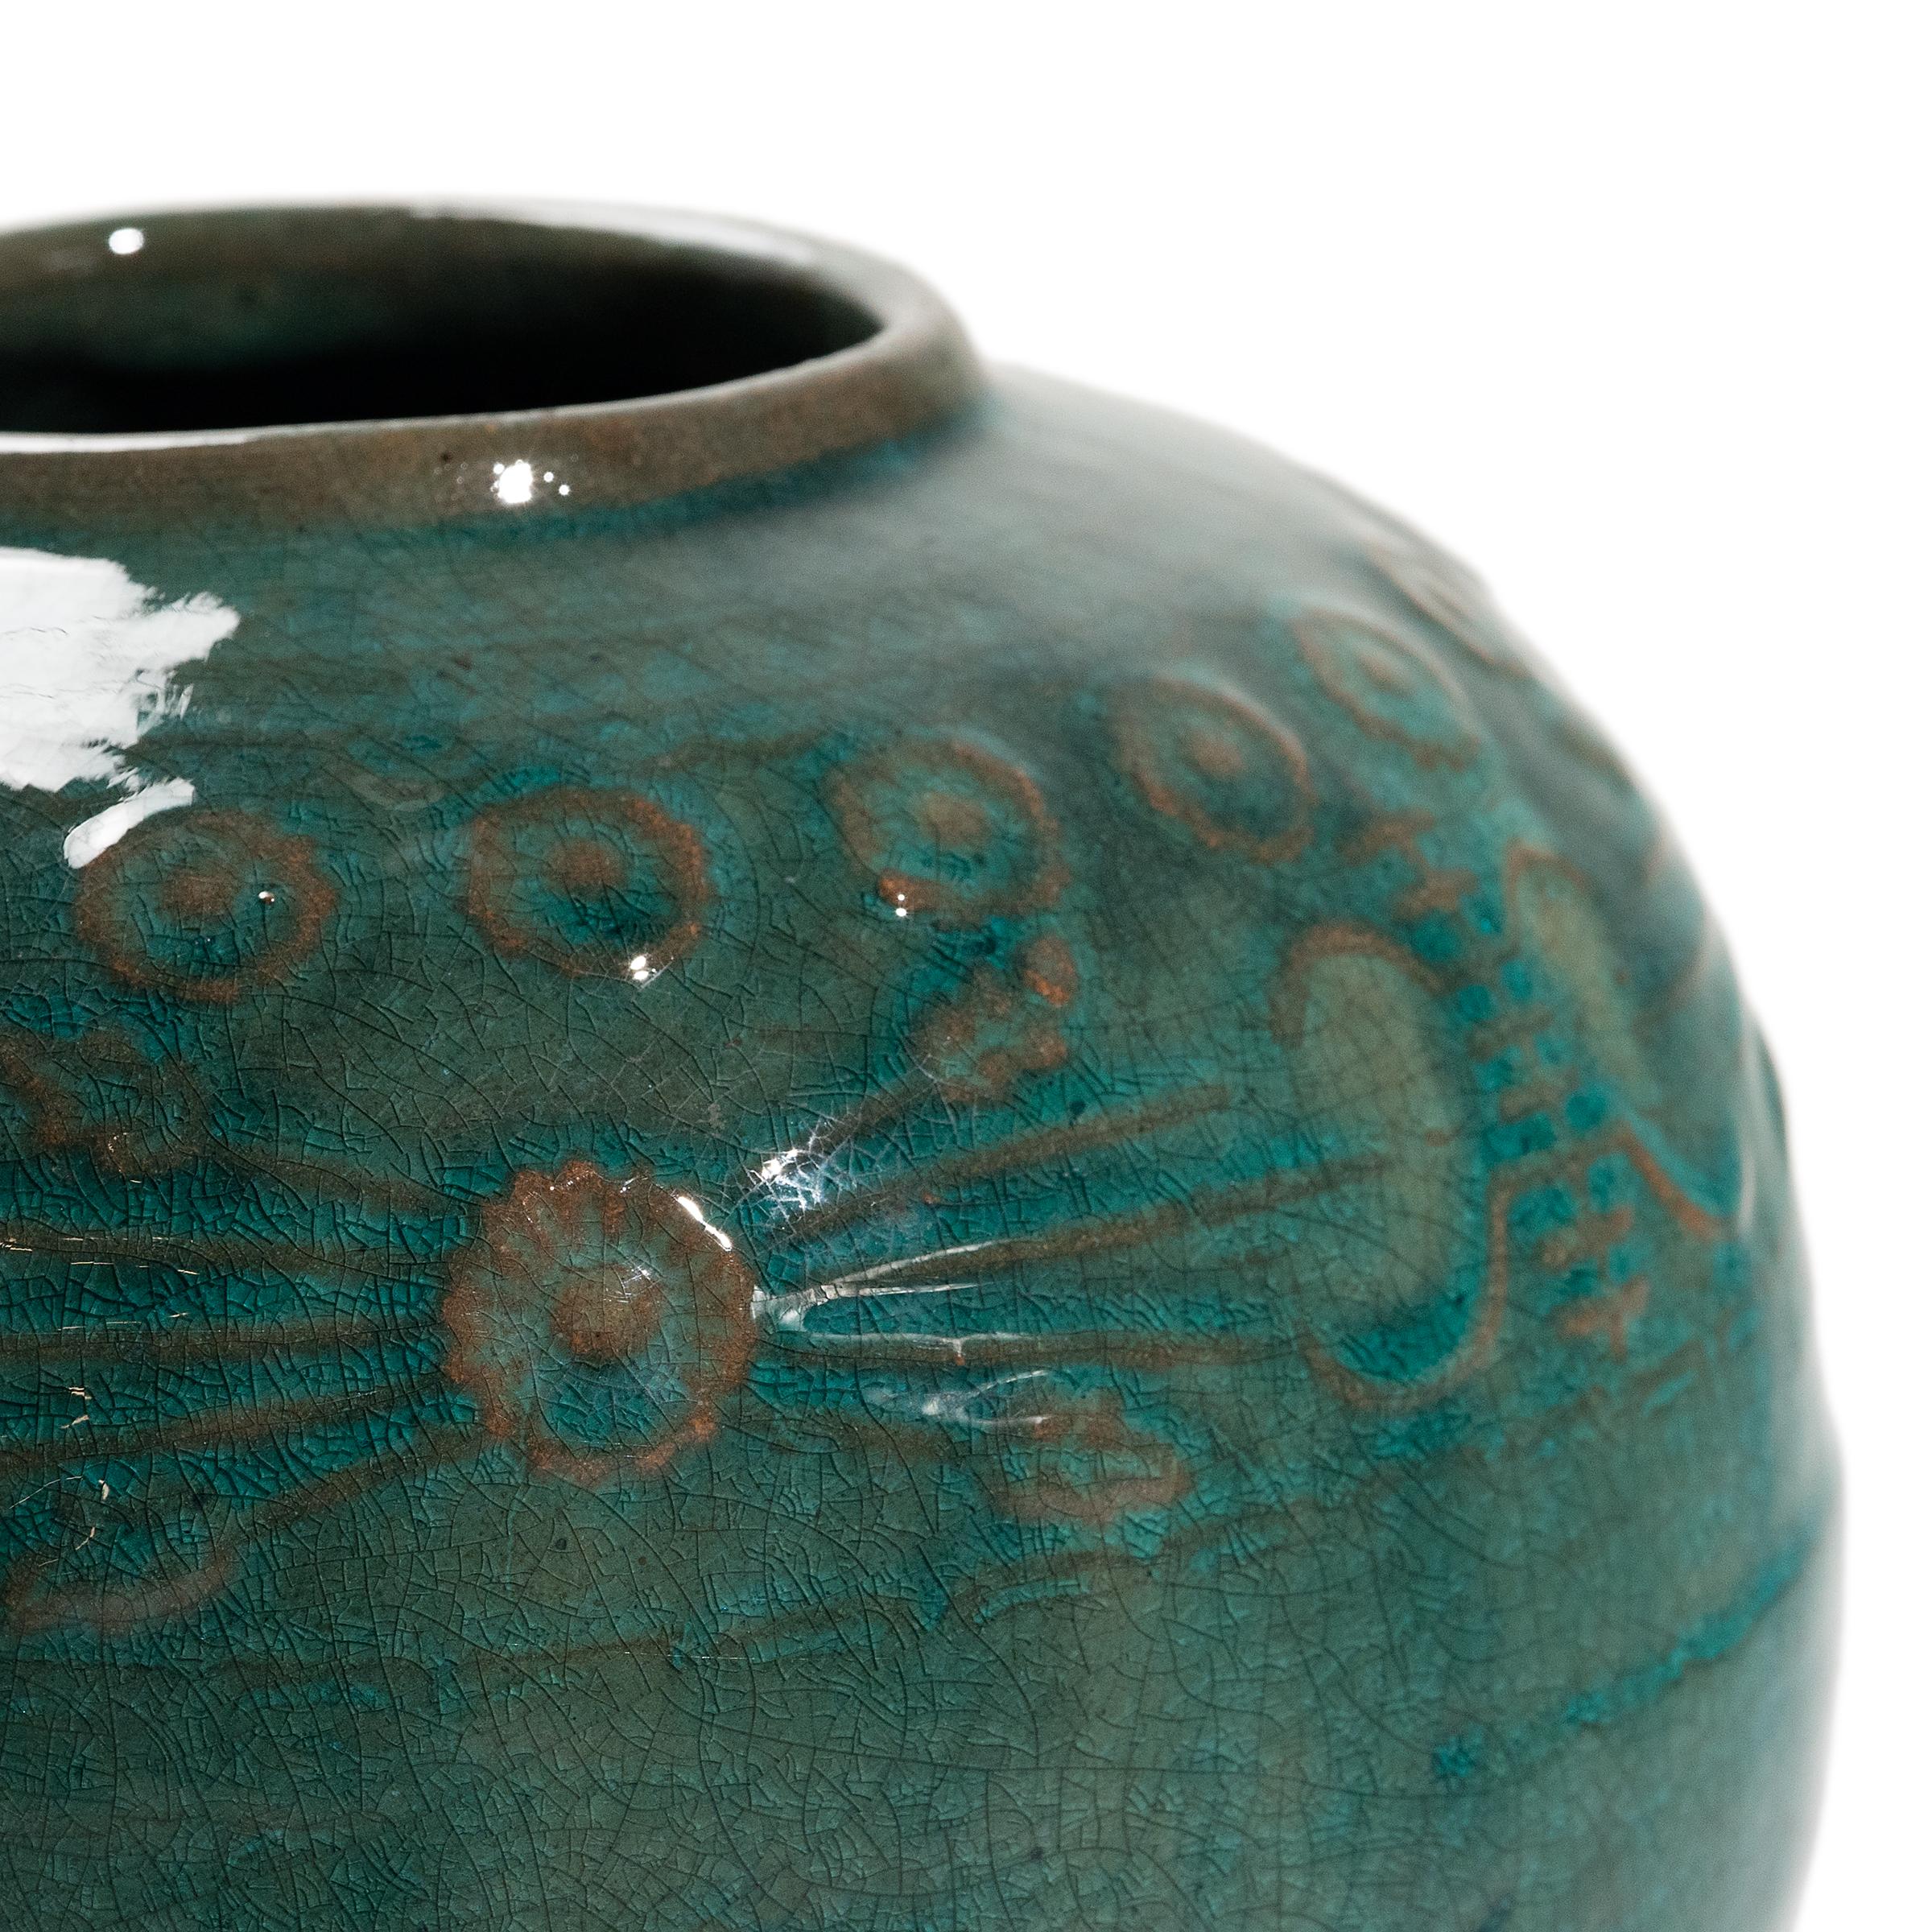 Glazed Jade Chinese Salt Jar, c. 1900